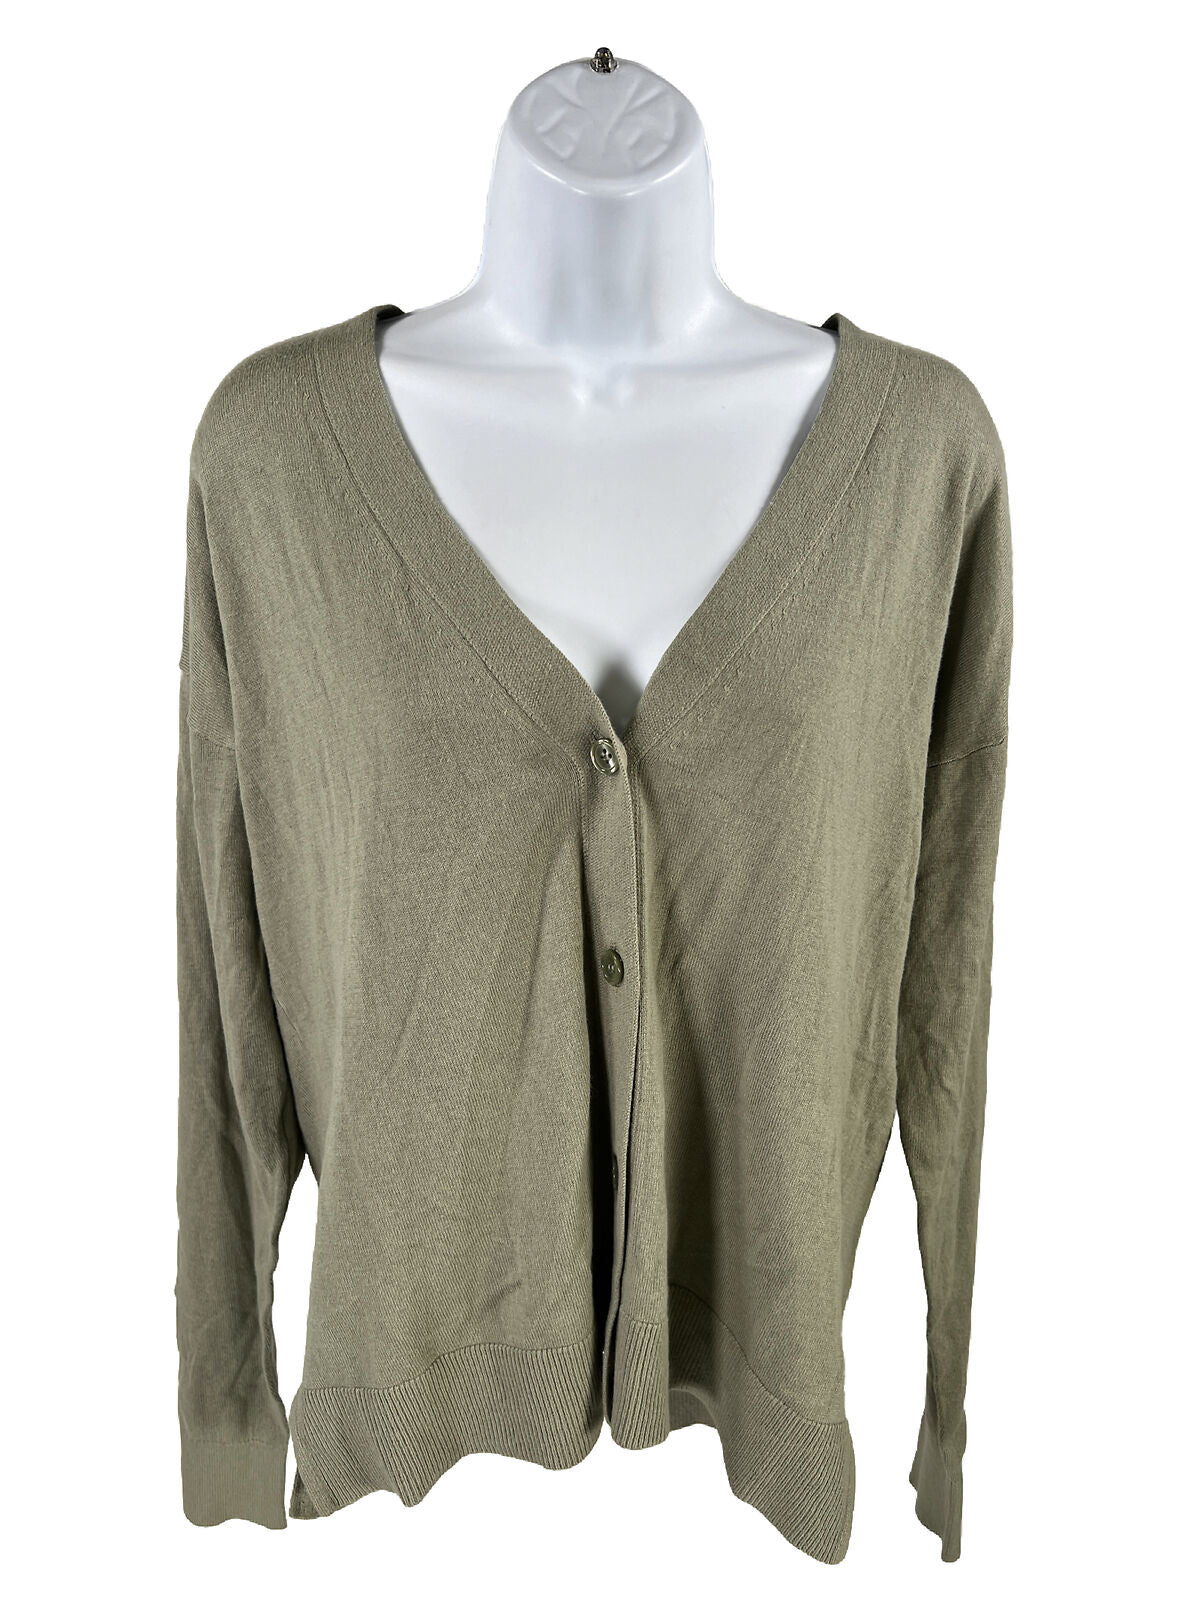 NEW Banana Republic Women's Green Long Sleeve Cardigan Sweater - M